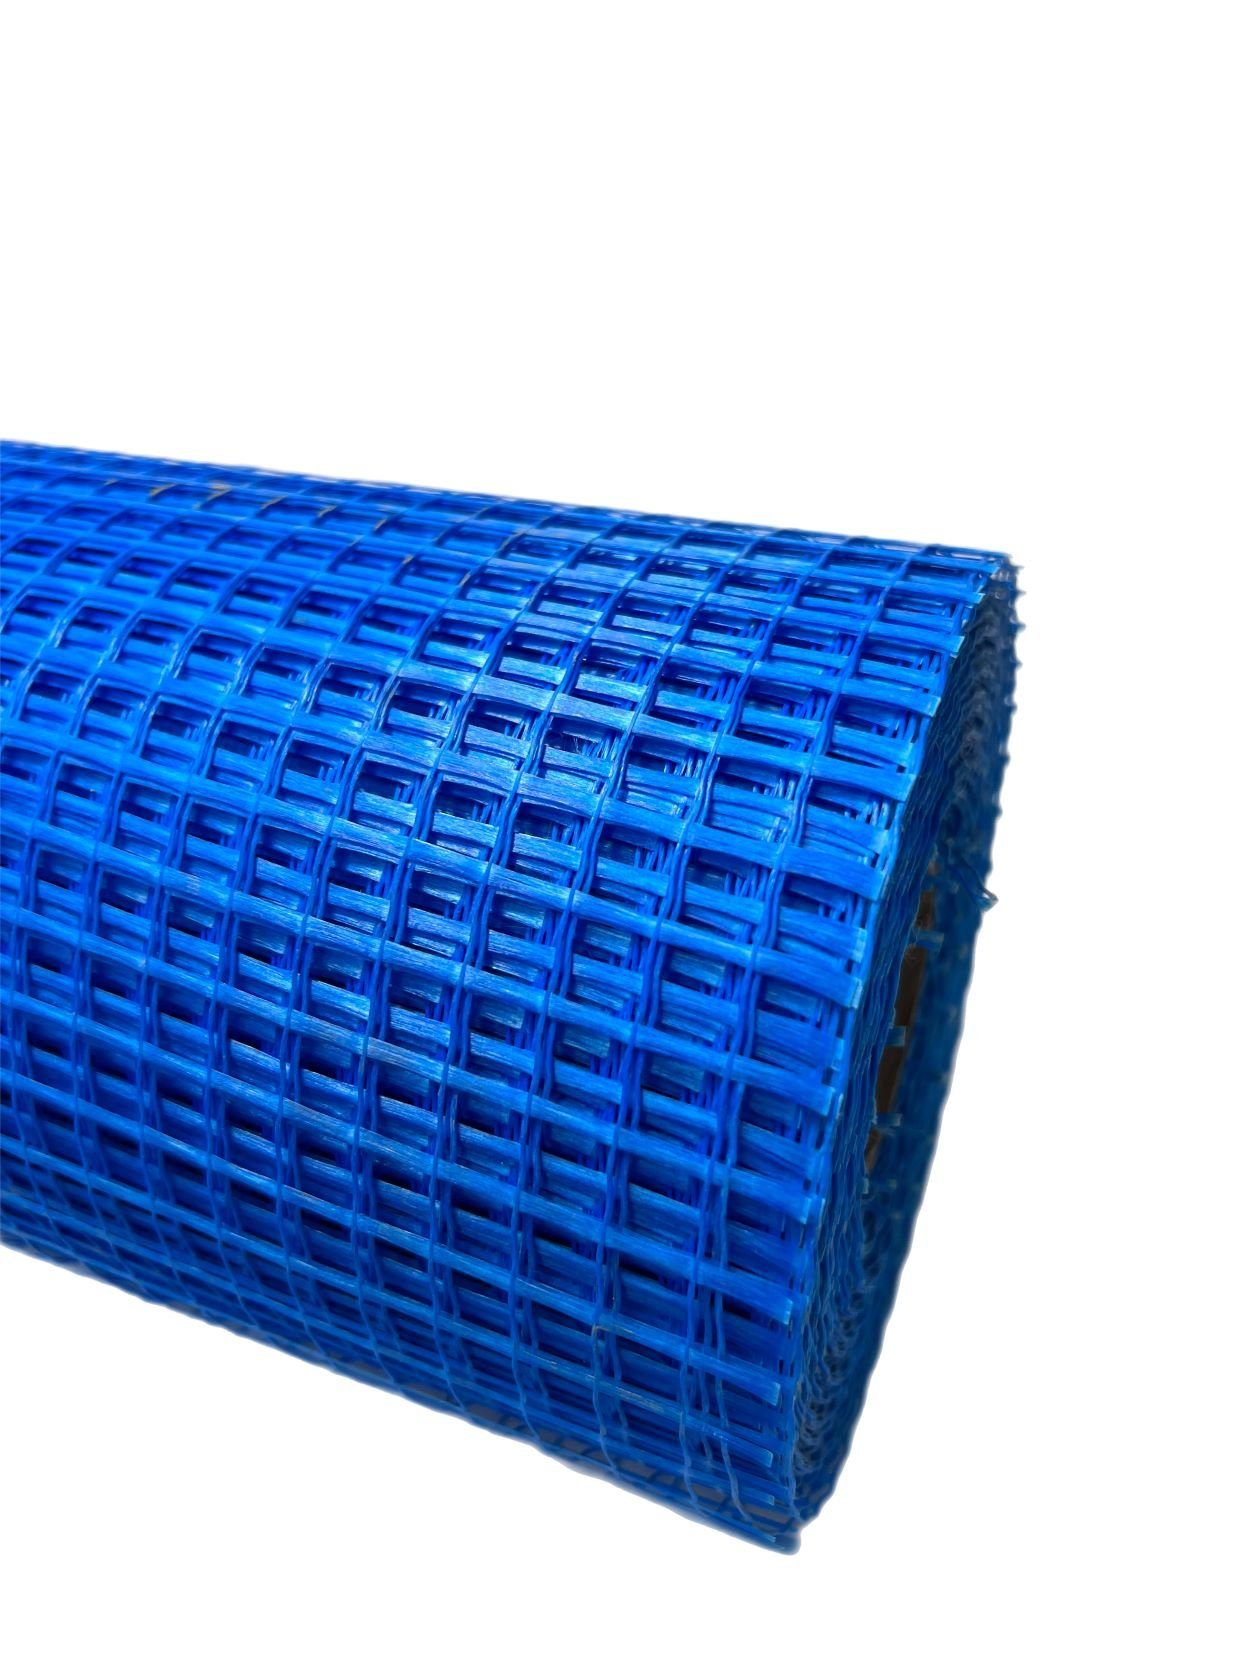 VaGo-Tools Glaswolle Putzgewebe Blau Armierungsgewebe 250m² 110g/m²